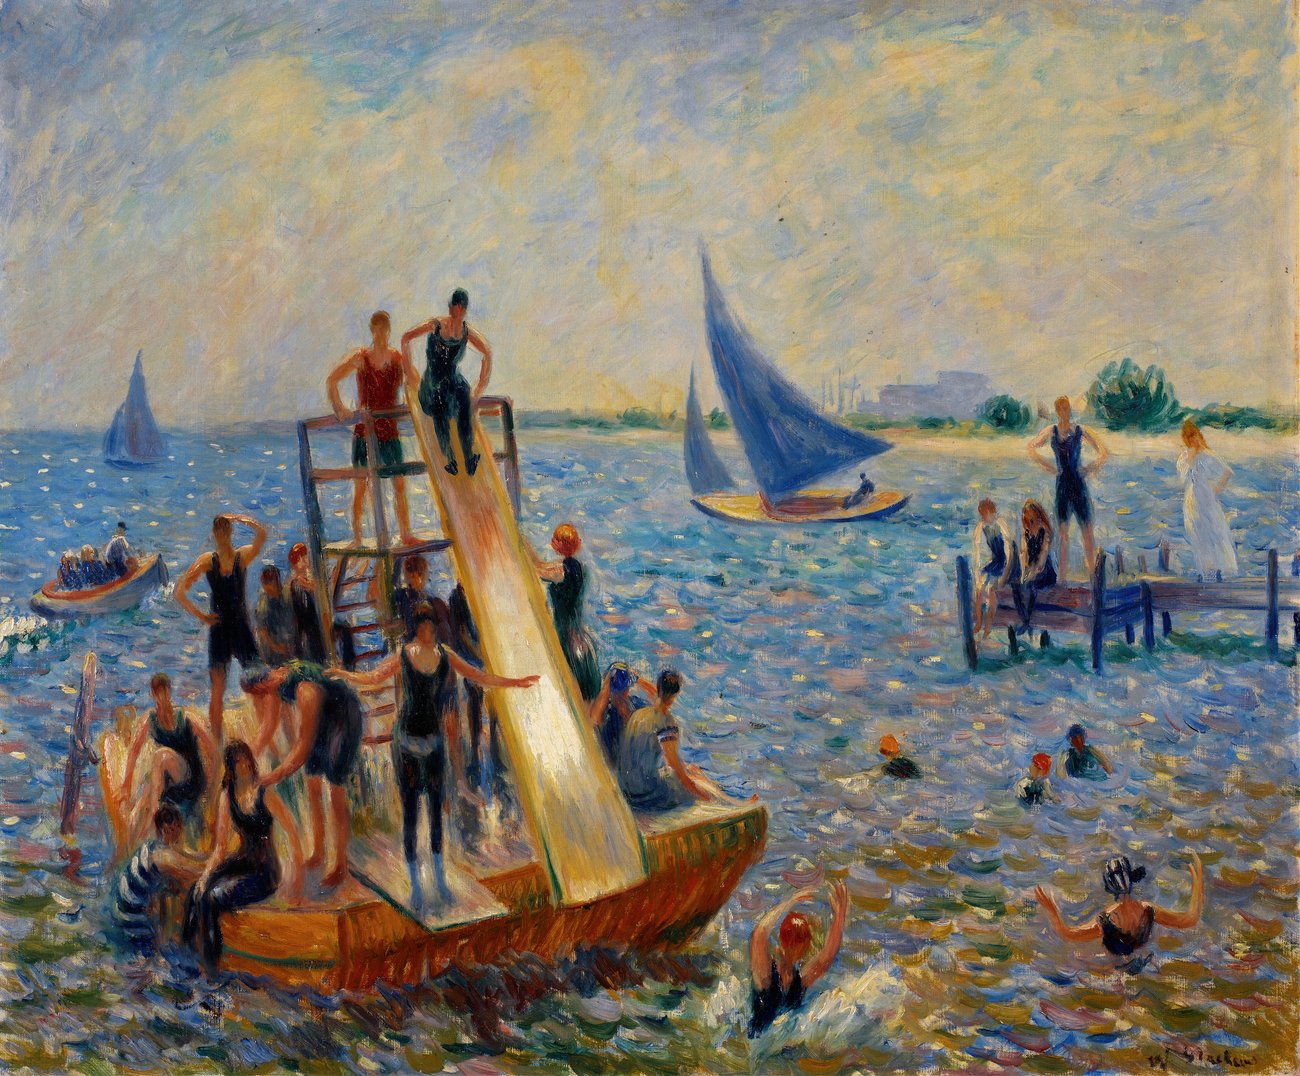 The Raft (1915)